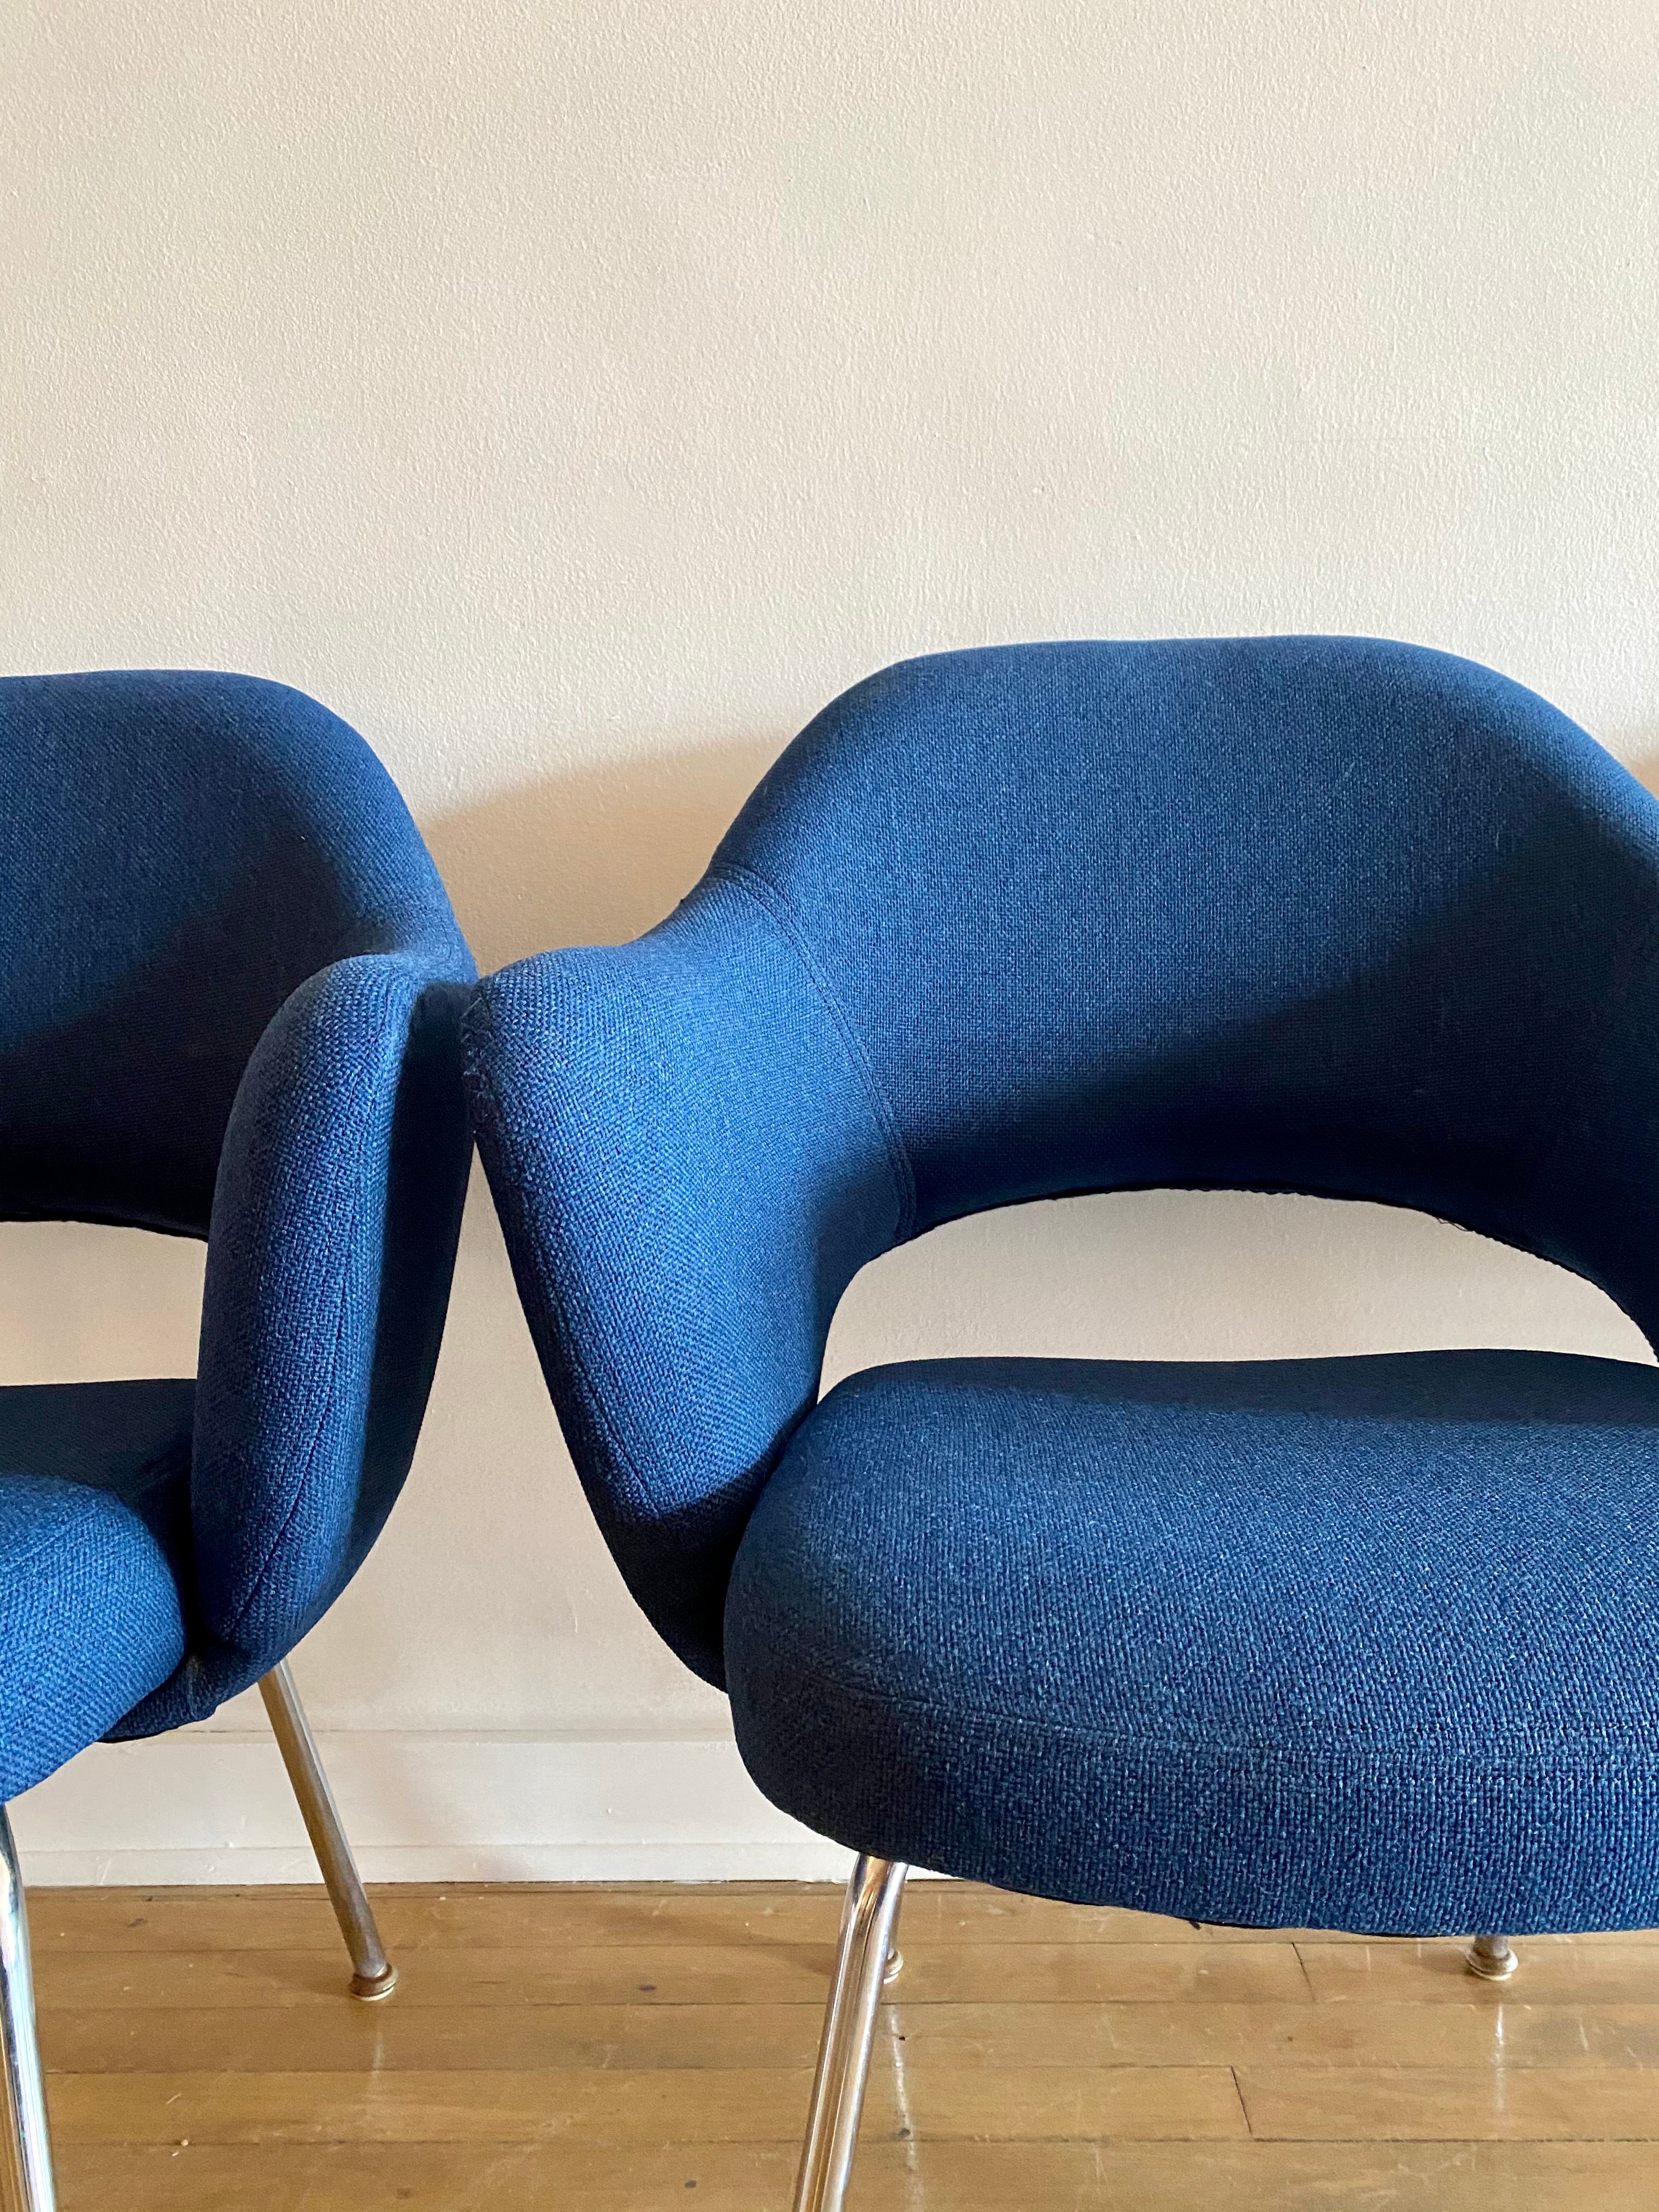 Set of 4 Eero Saarinen Executive Chairs upholstered in Indigo Blue